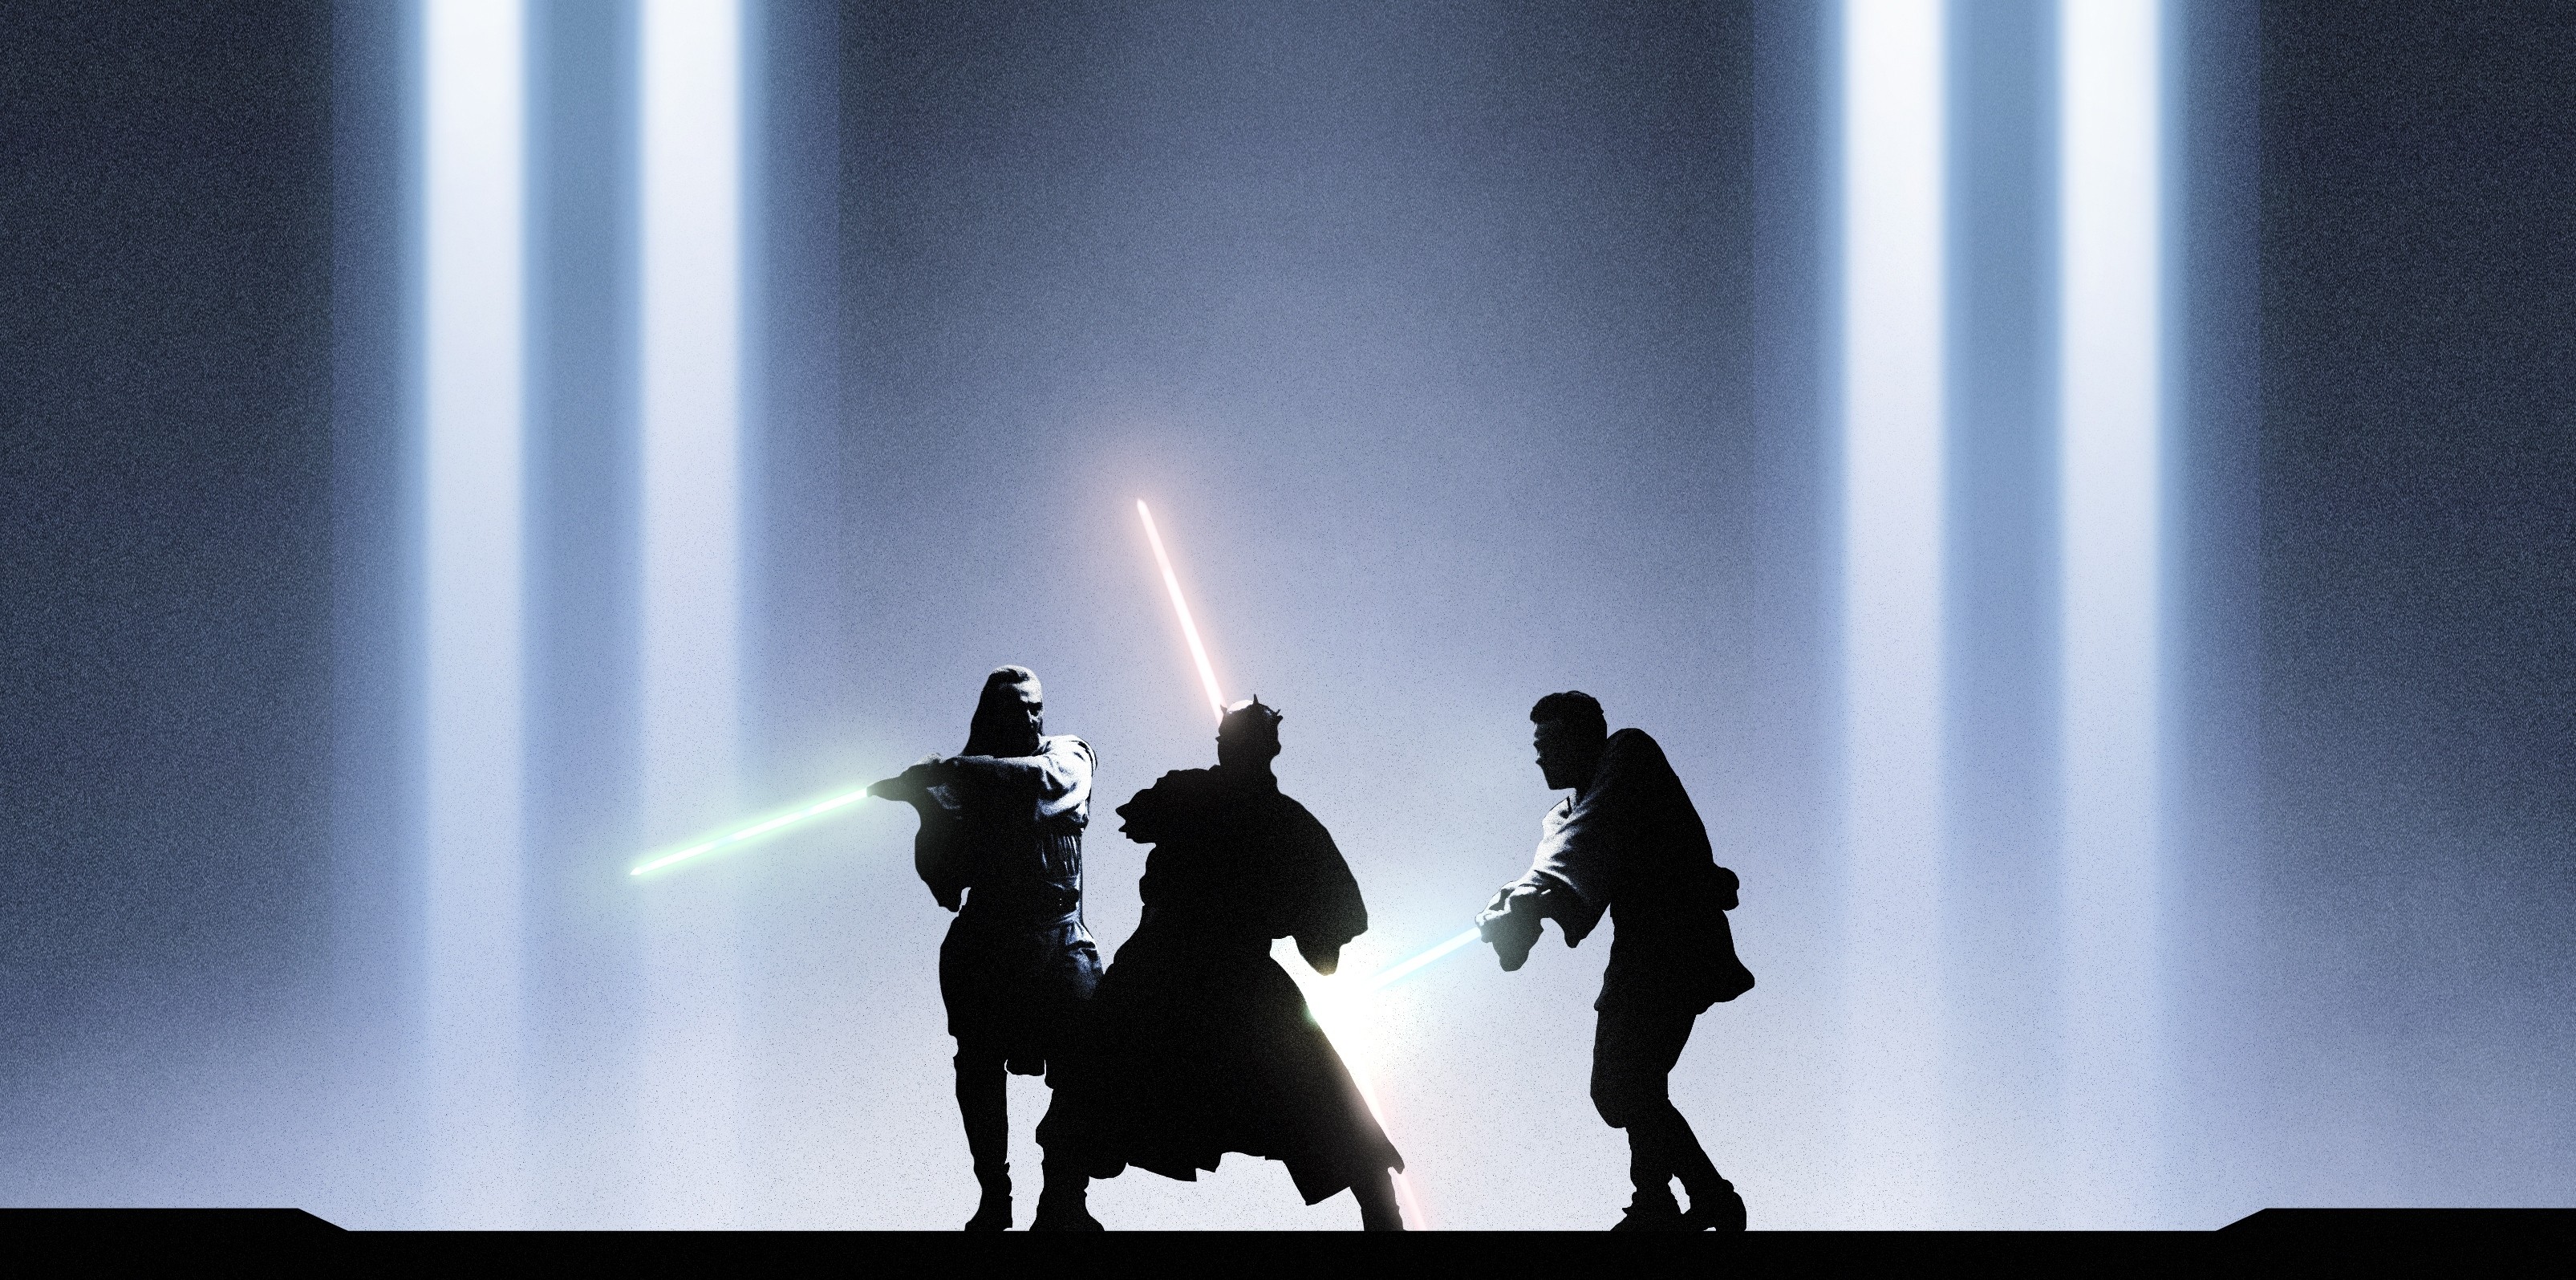 Obi Wan Kenobi HD Wallpaper, Background